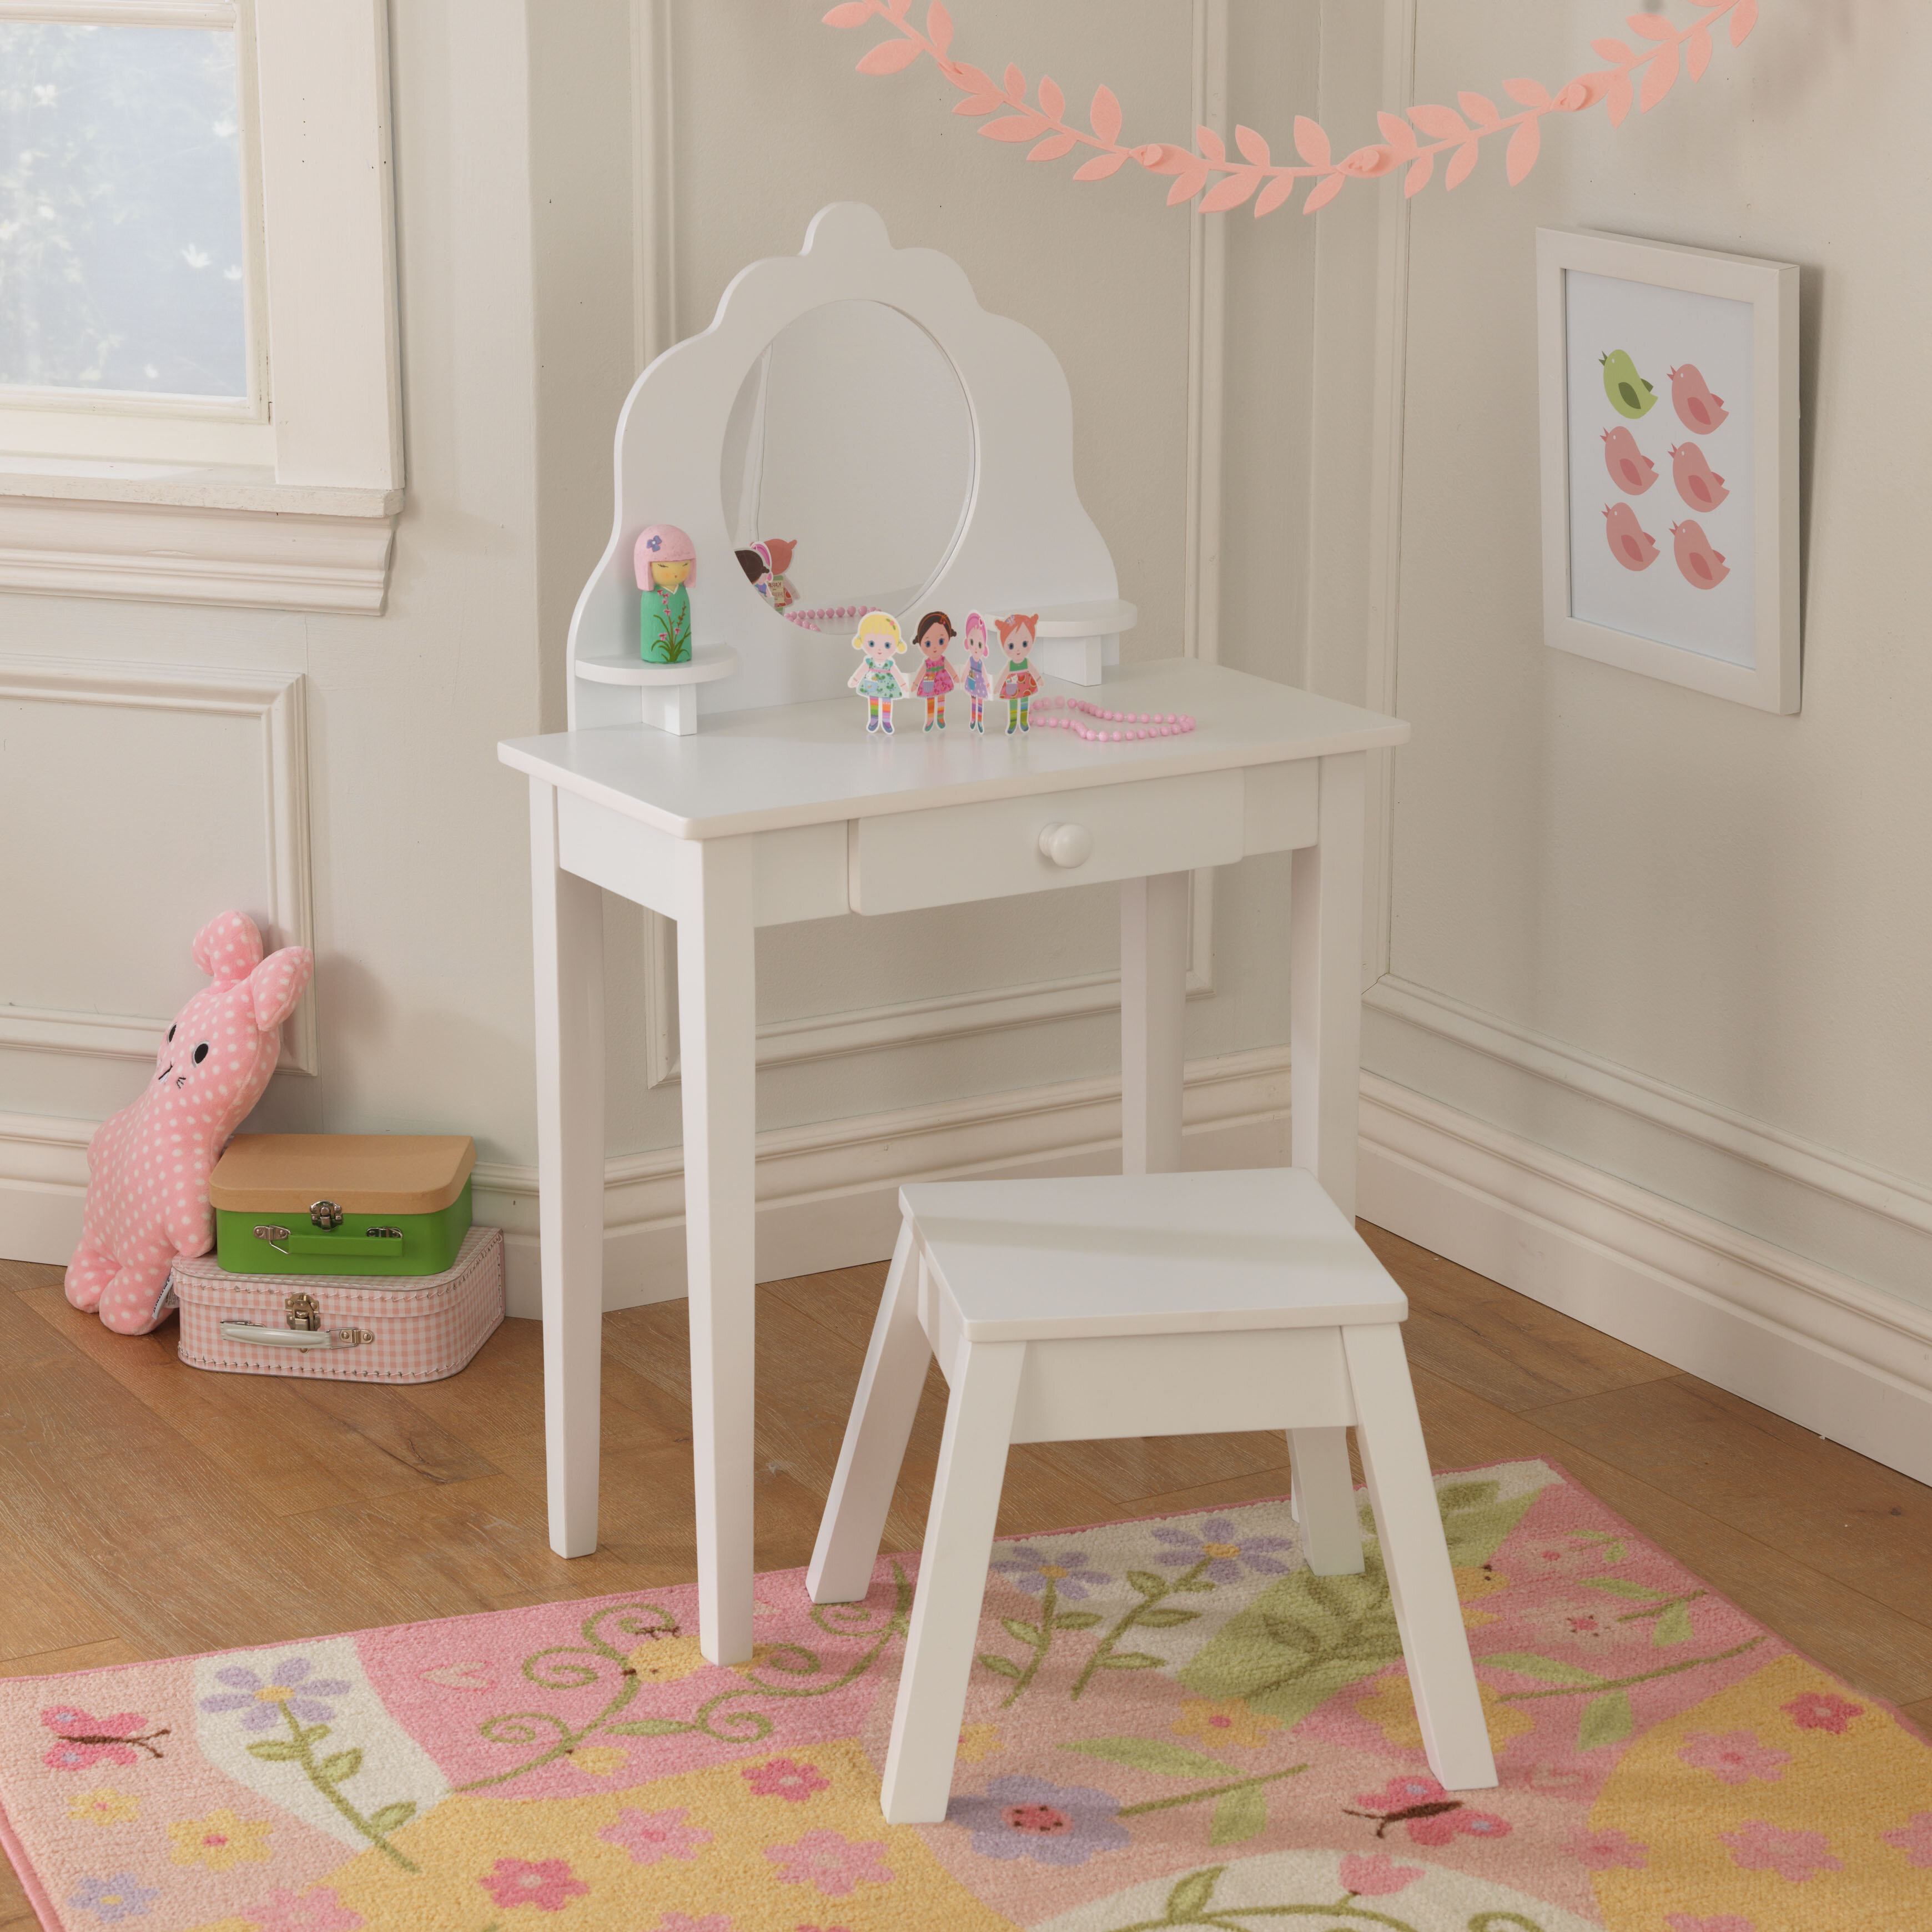 Kidkraft Kids Dressing Table Set With Mirror Reviews Wayfaircouk